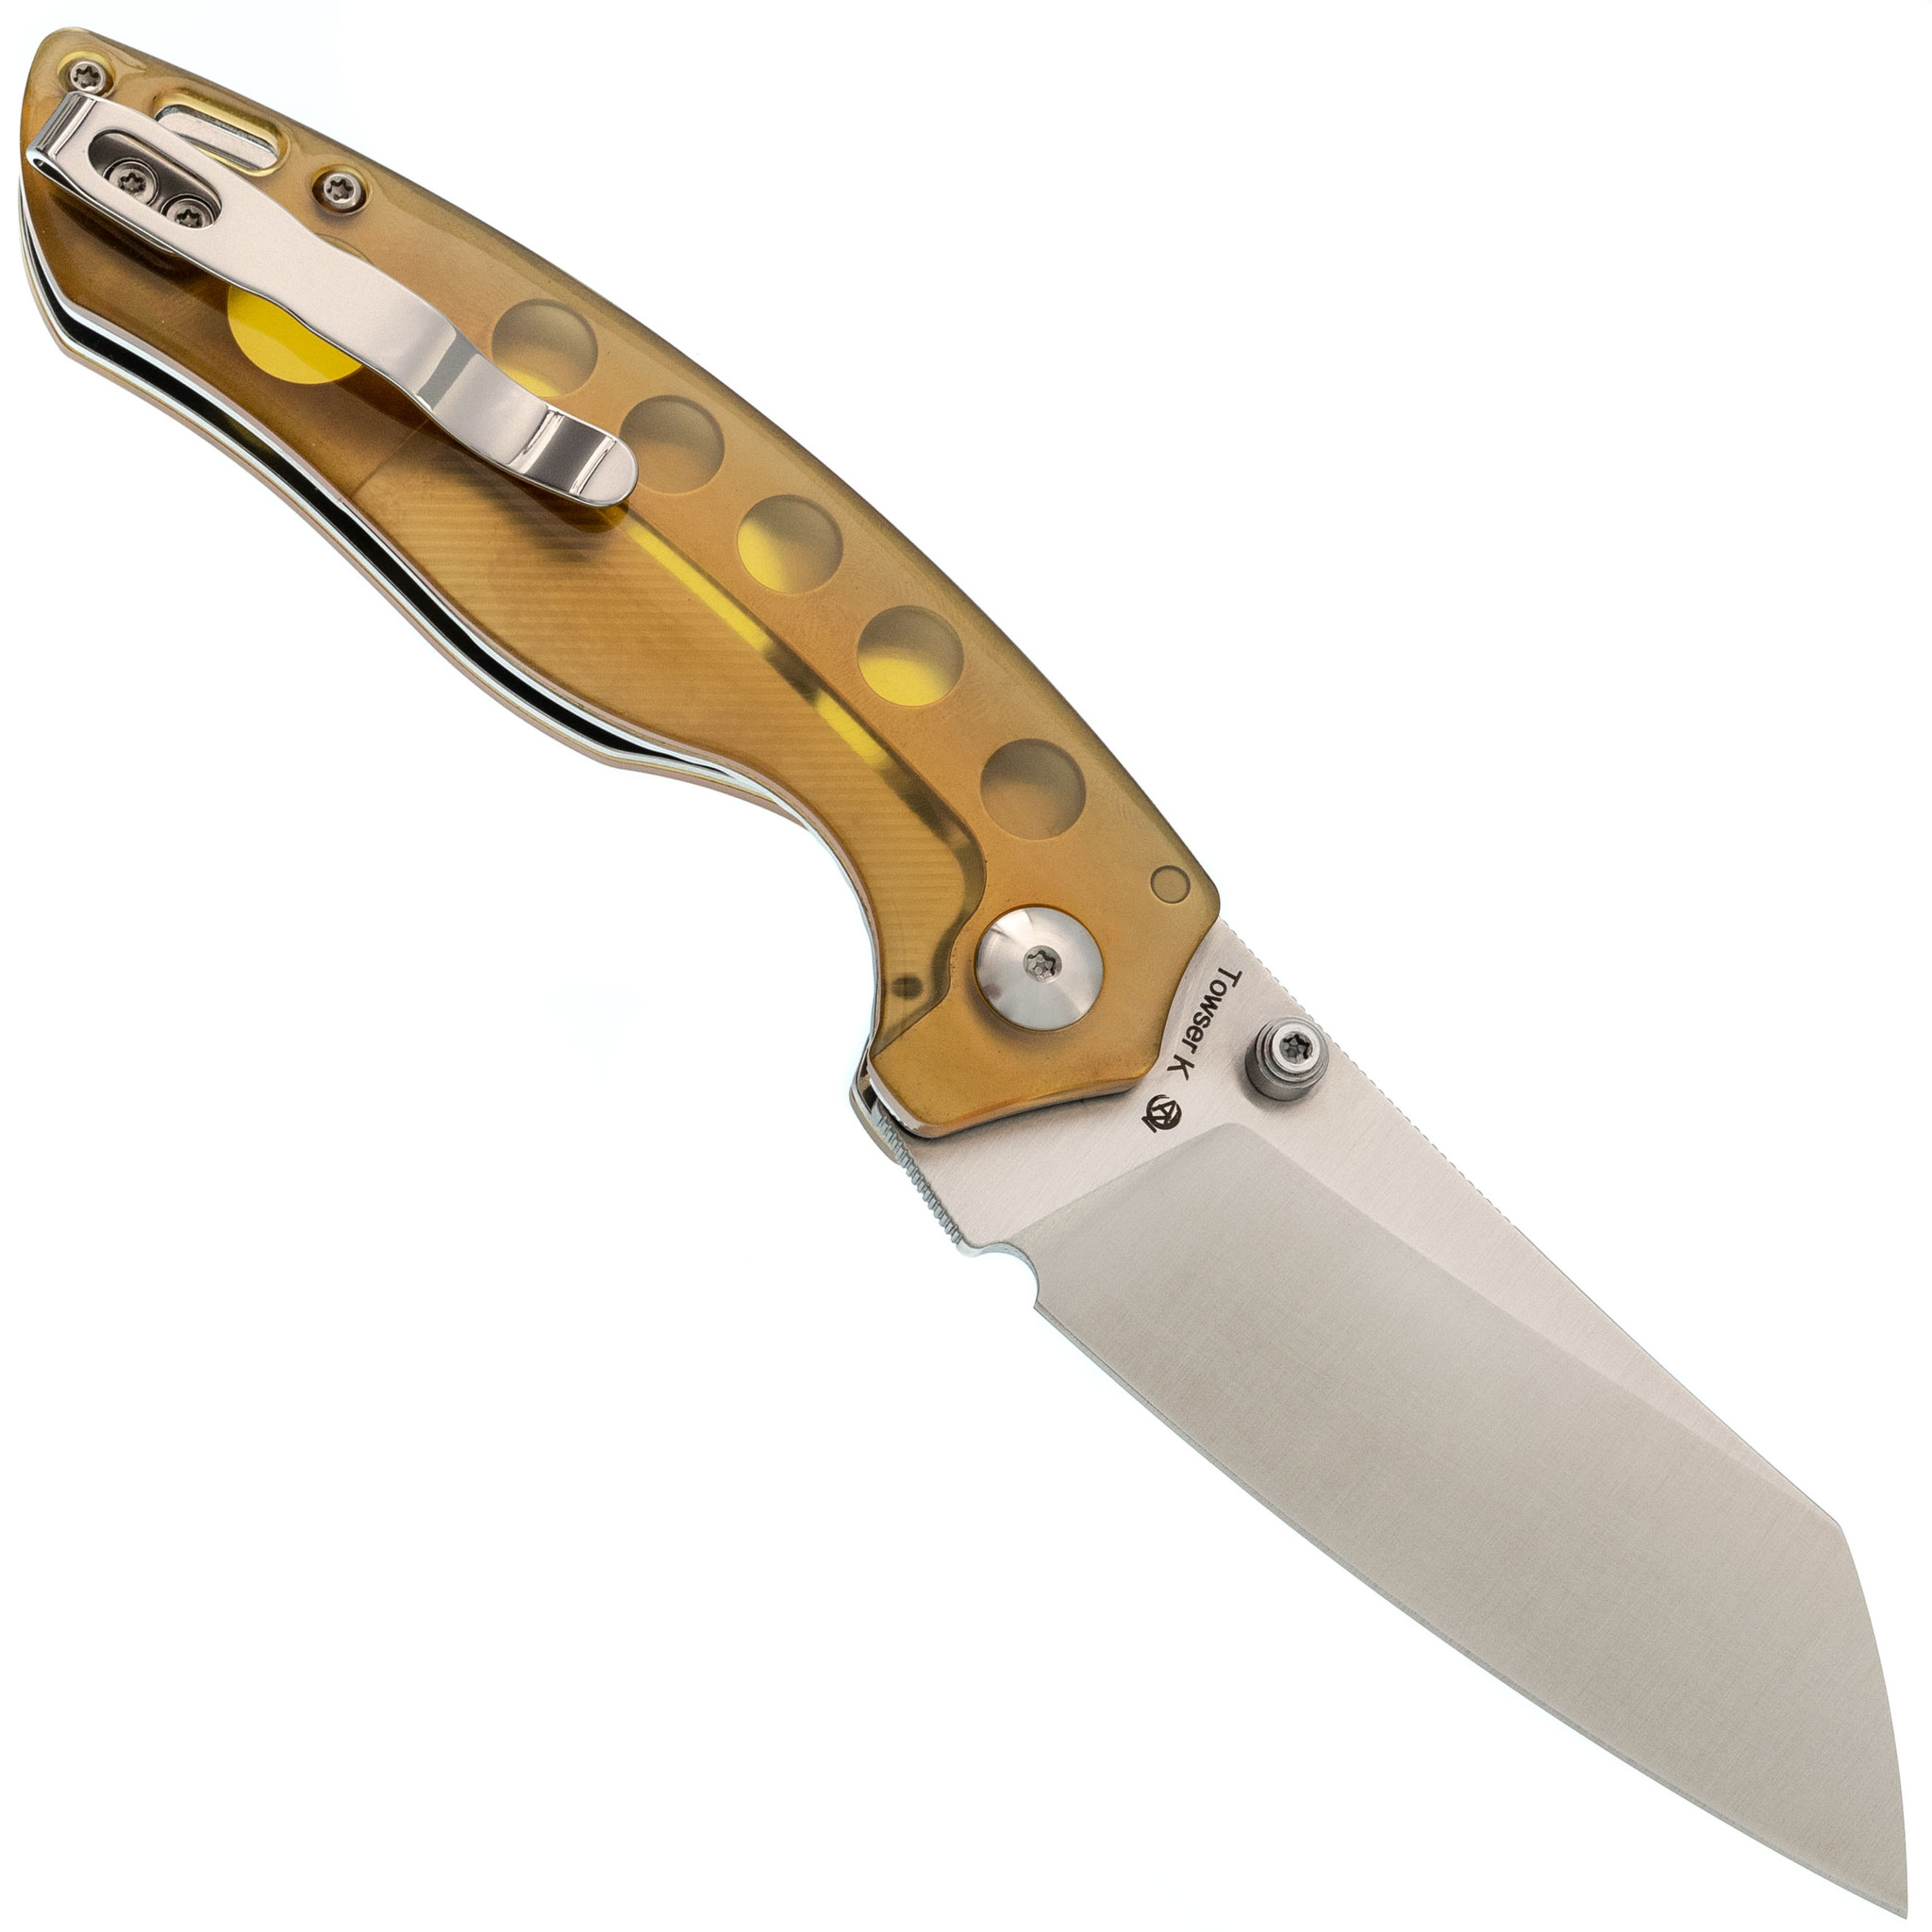 Складной нож Kizer Towser K, сталь 154CM, рукоять PEI, желтый - фото 3